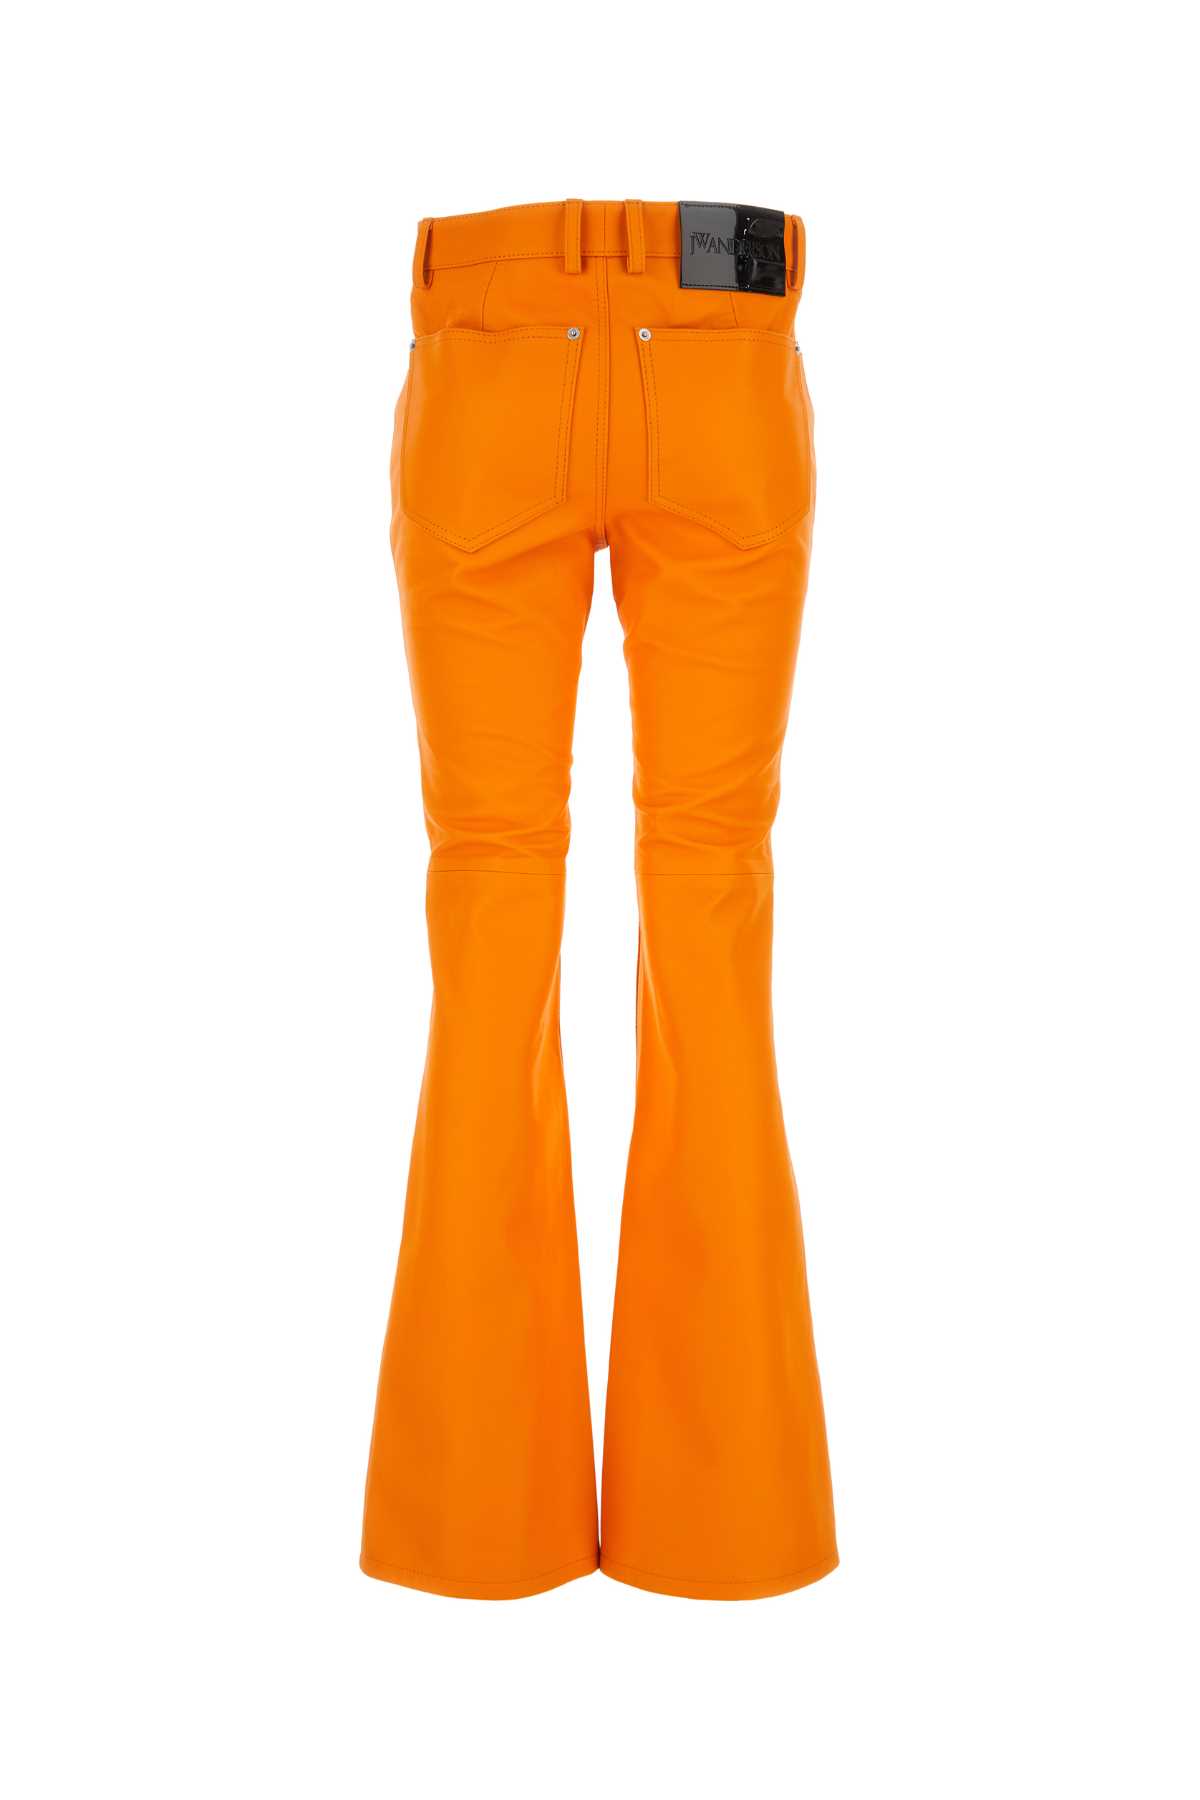 Jw Anderson Orange Leather Pant